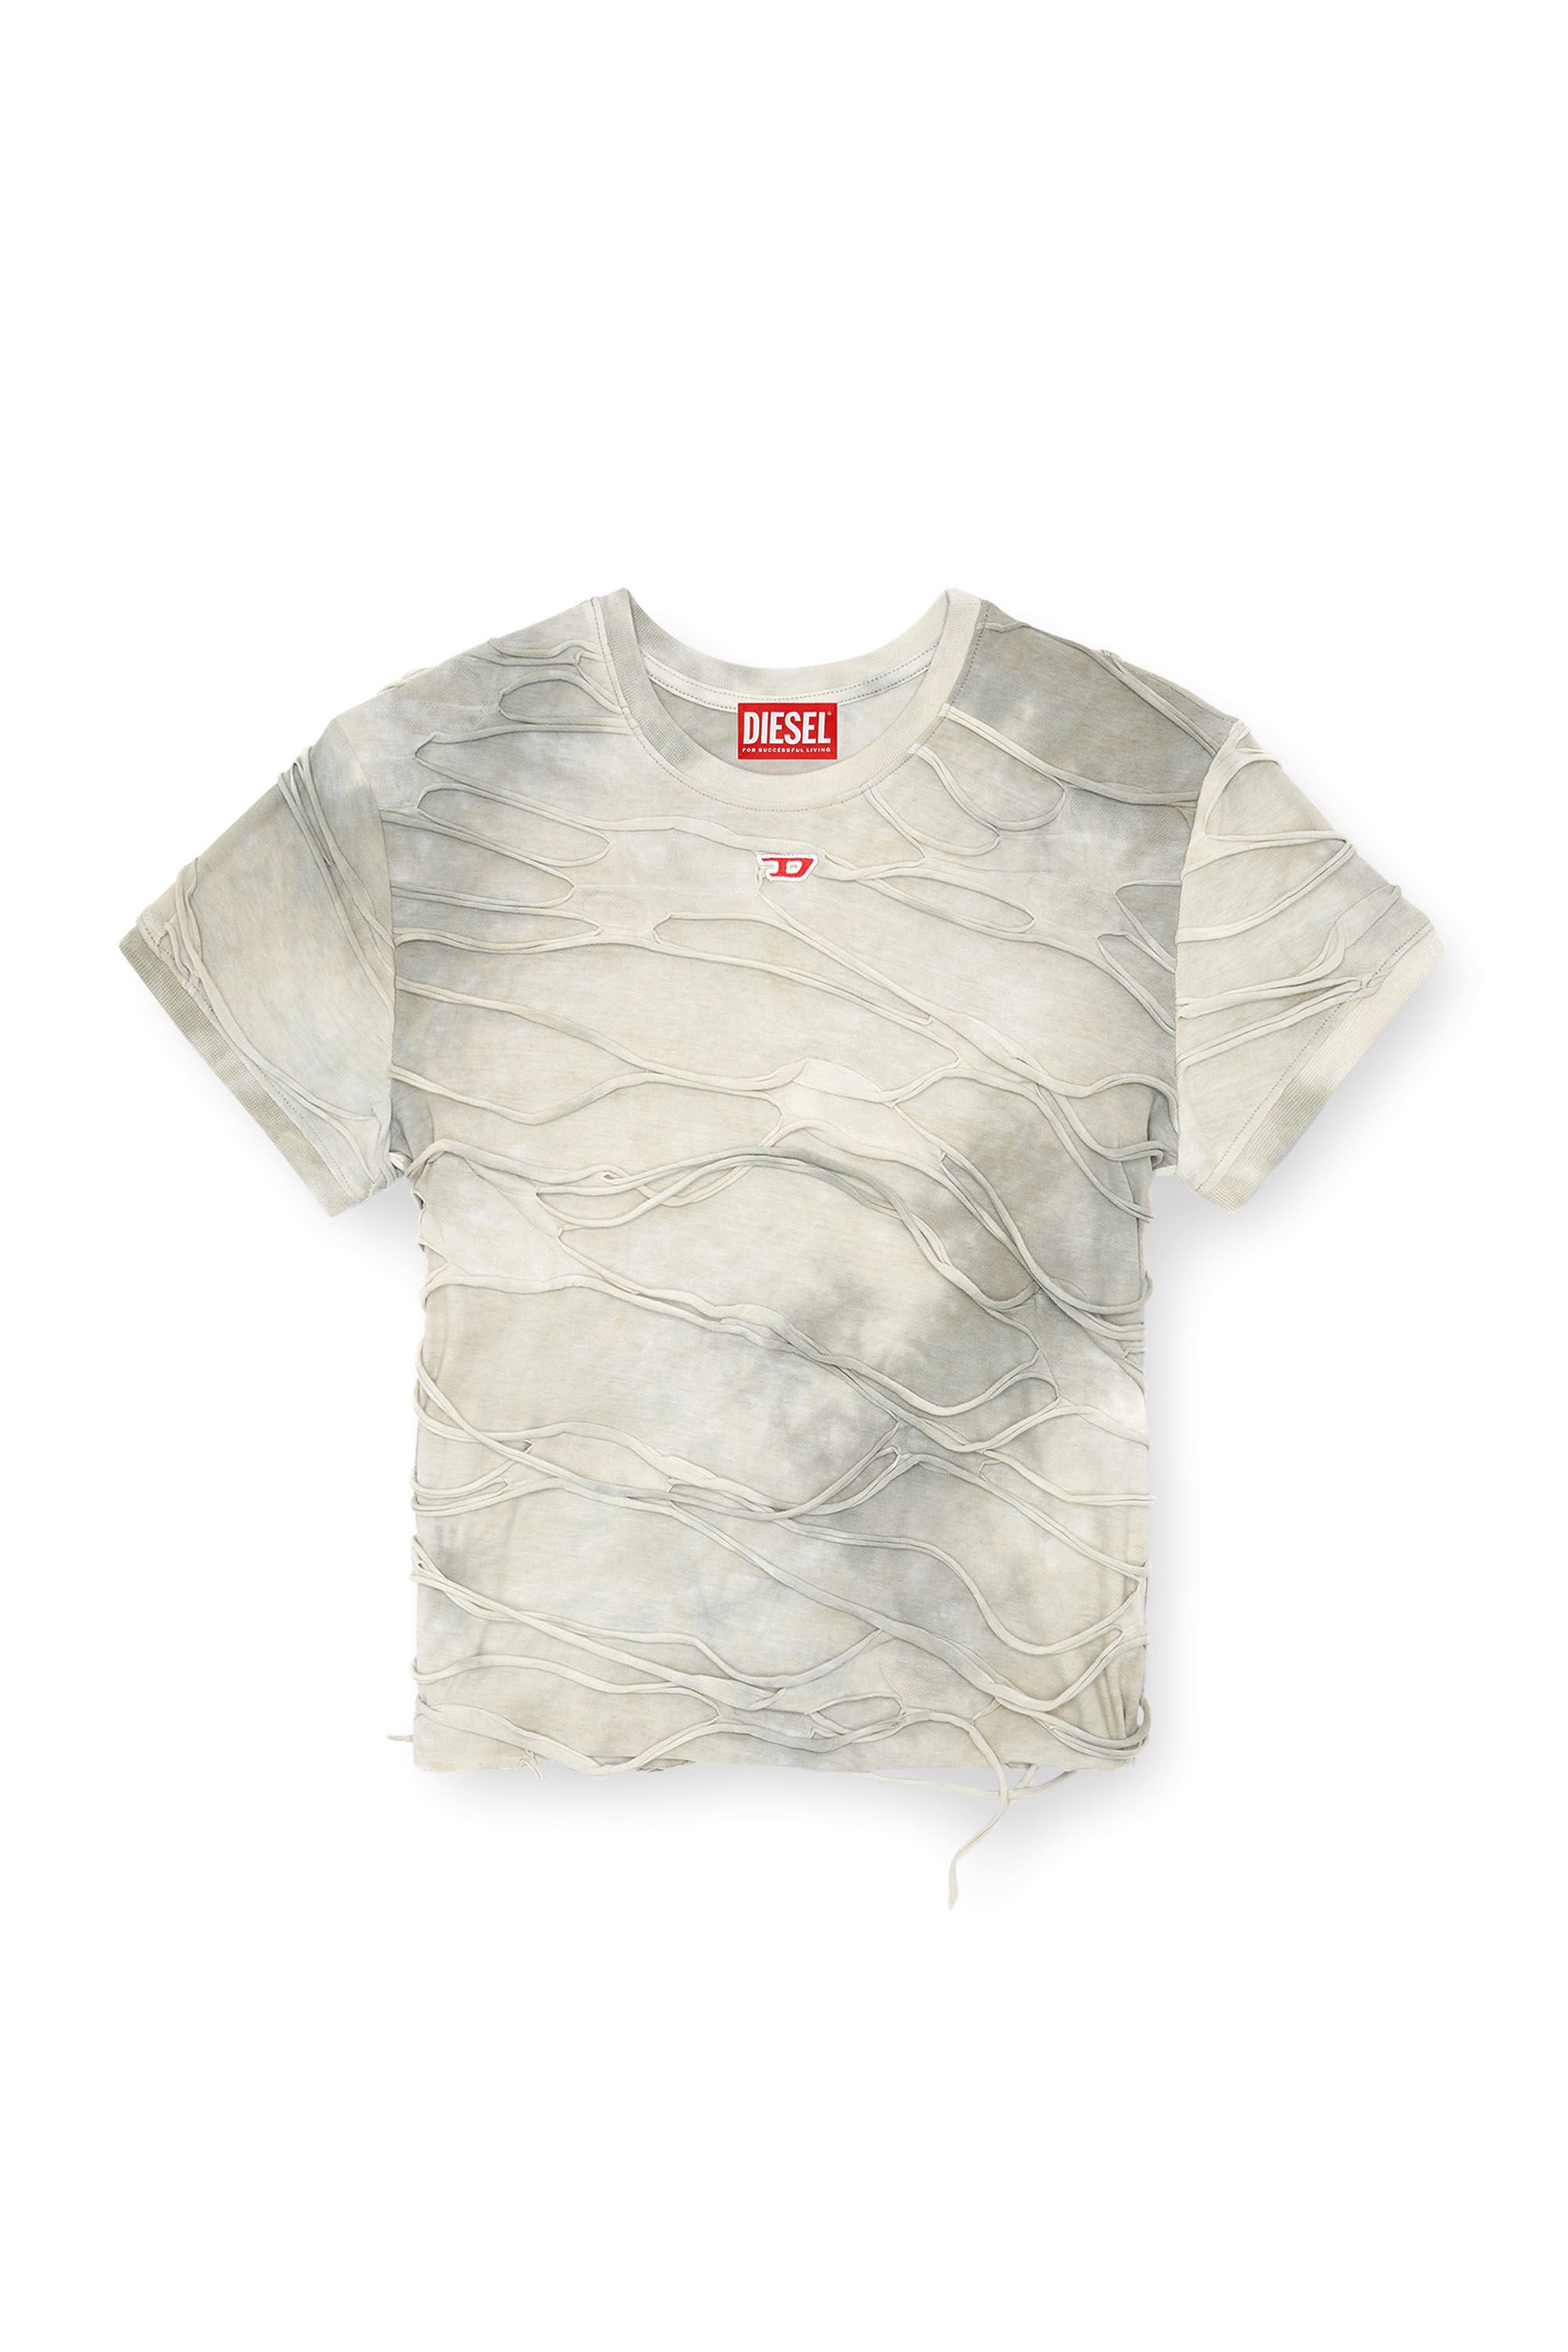 Diesel - T-UNCUTIE-LONG-P1, Mujer Camiseta con hilos flotantes in Gris - Image 2